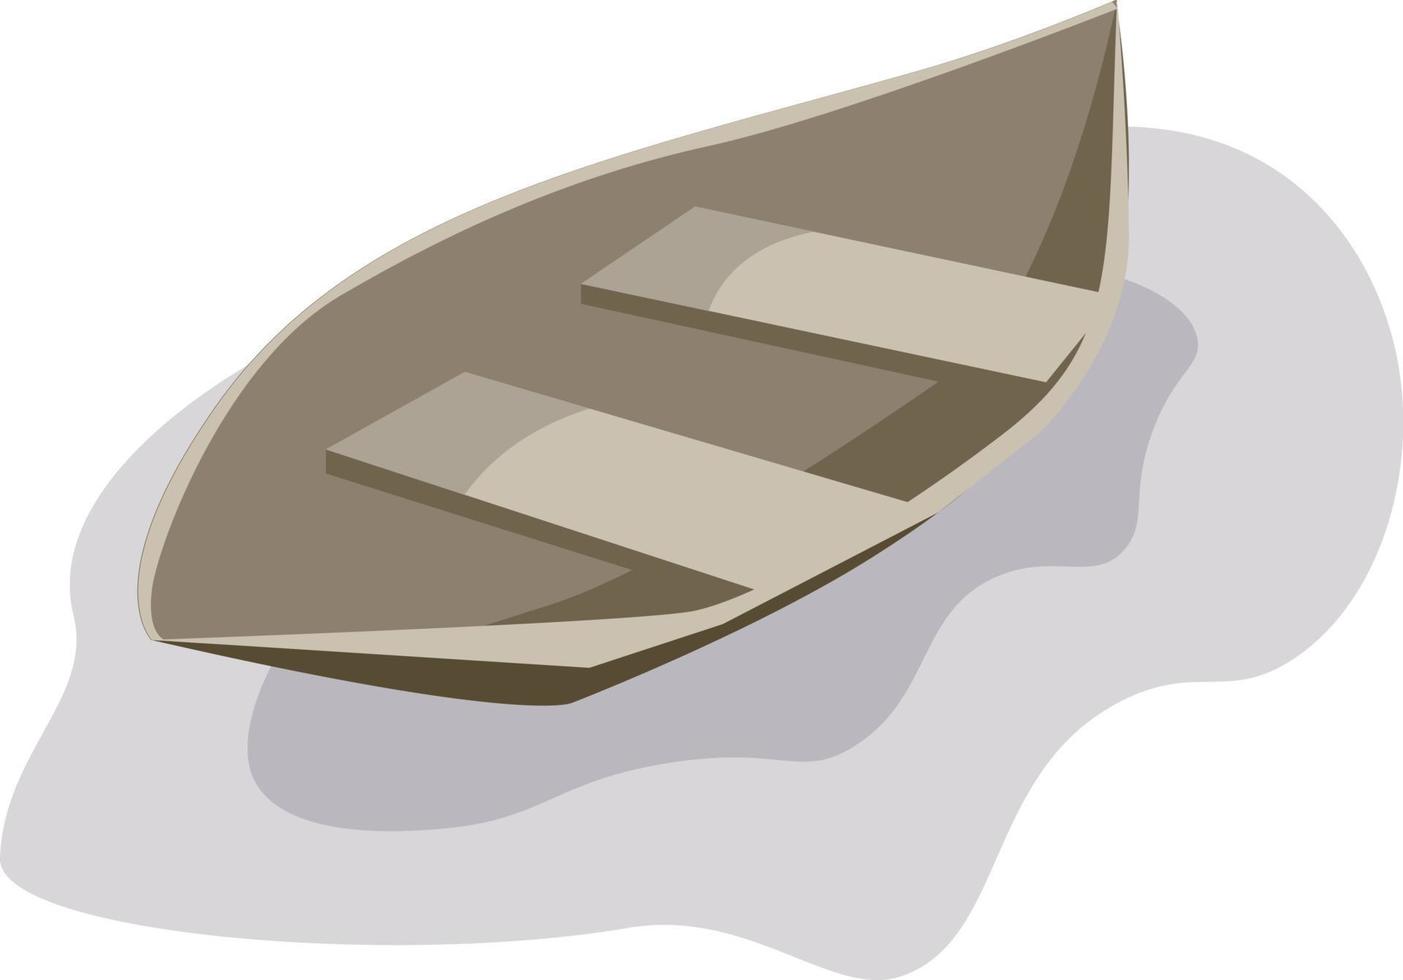 Canoe on water, illustration, vector on white background.